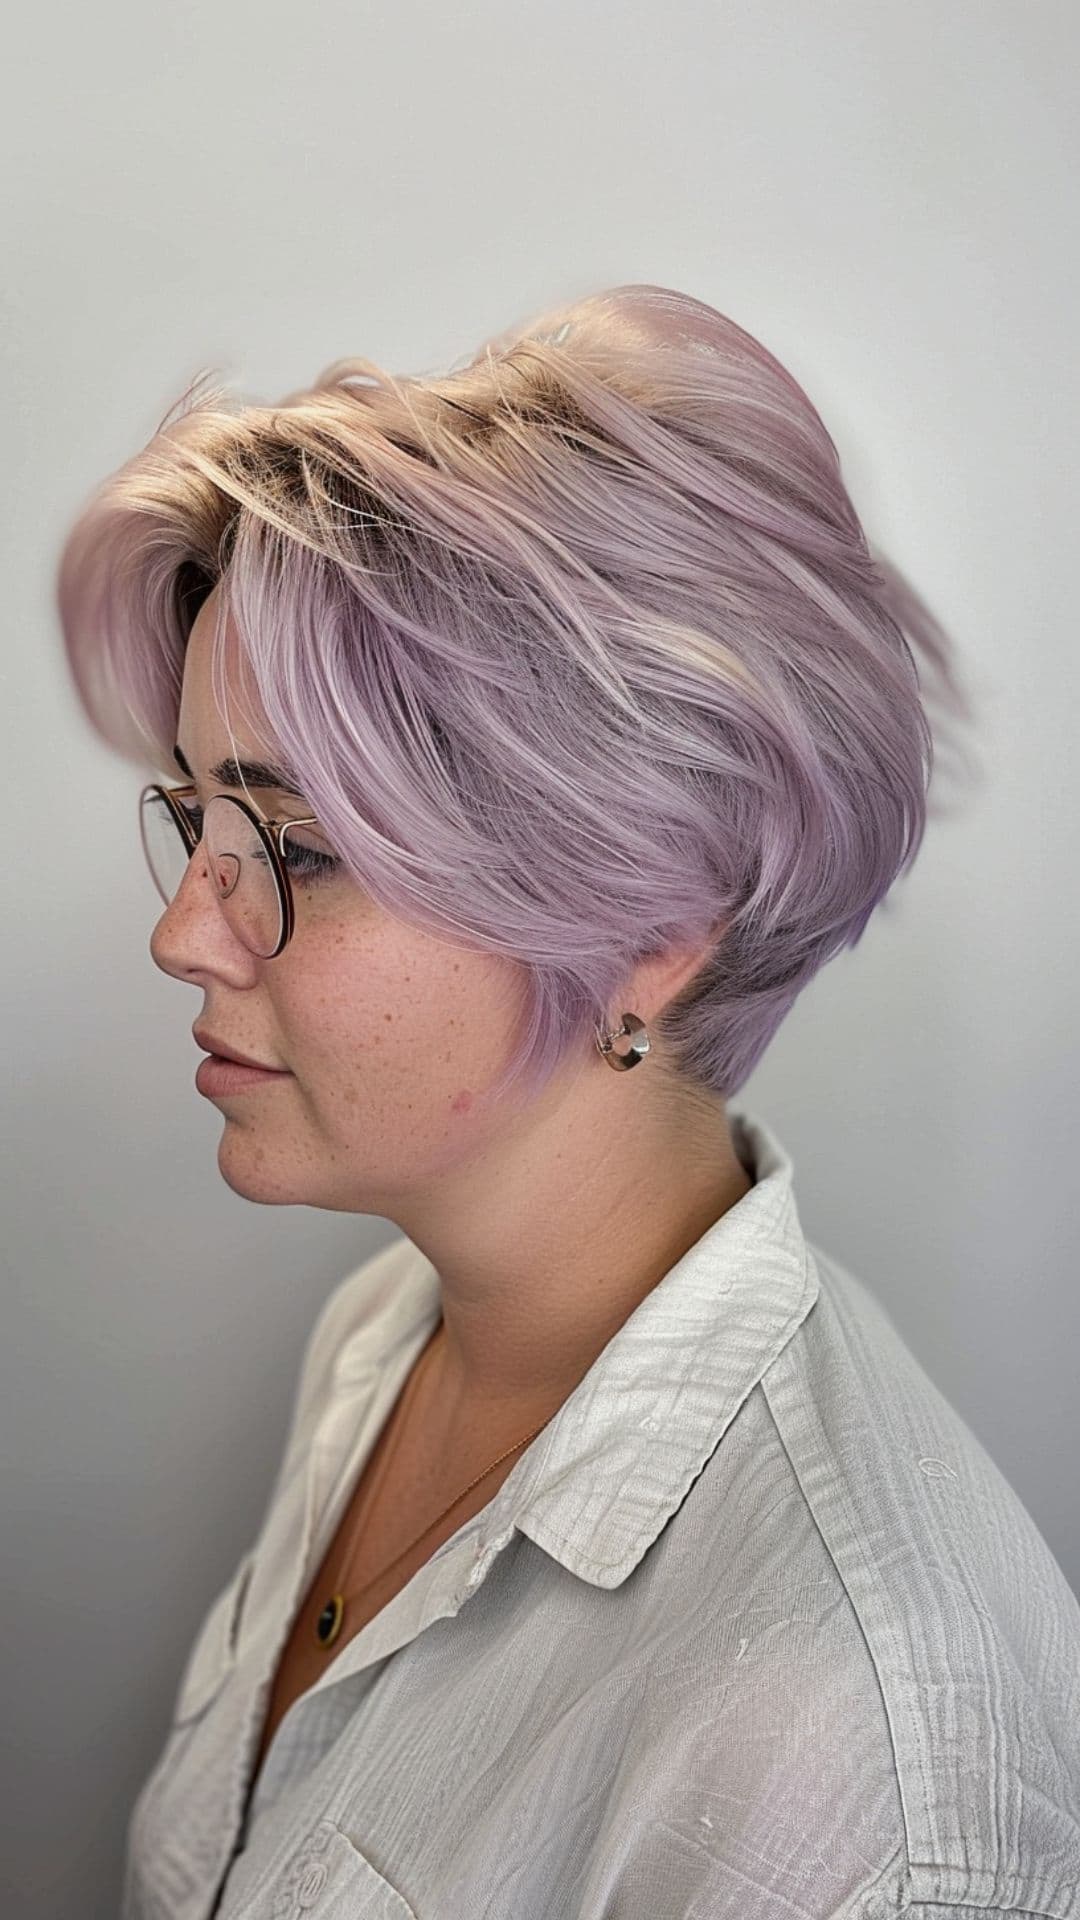 A woman modelling a short lilac hair.